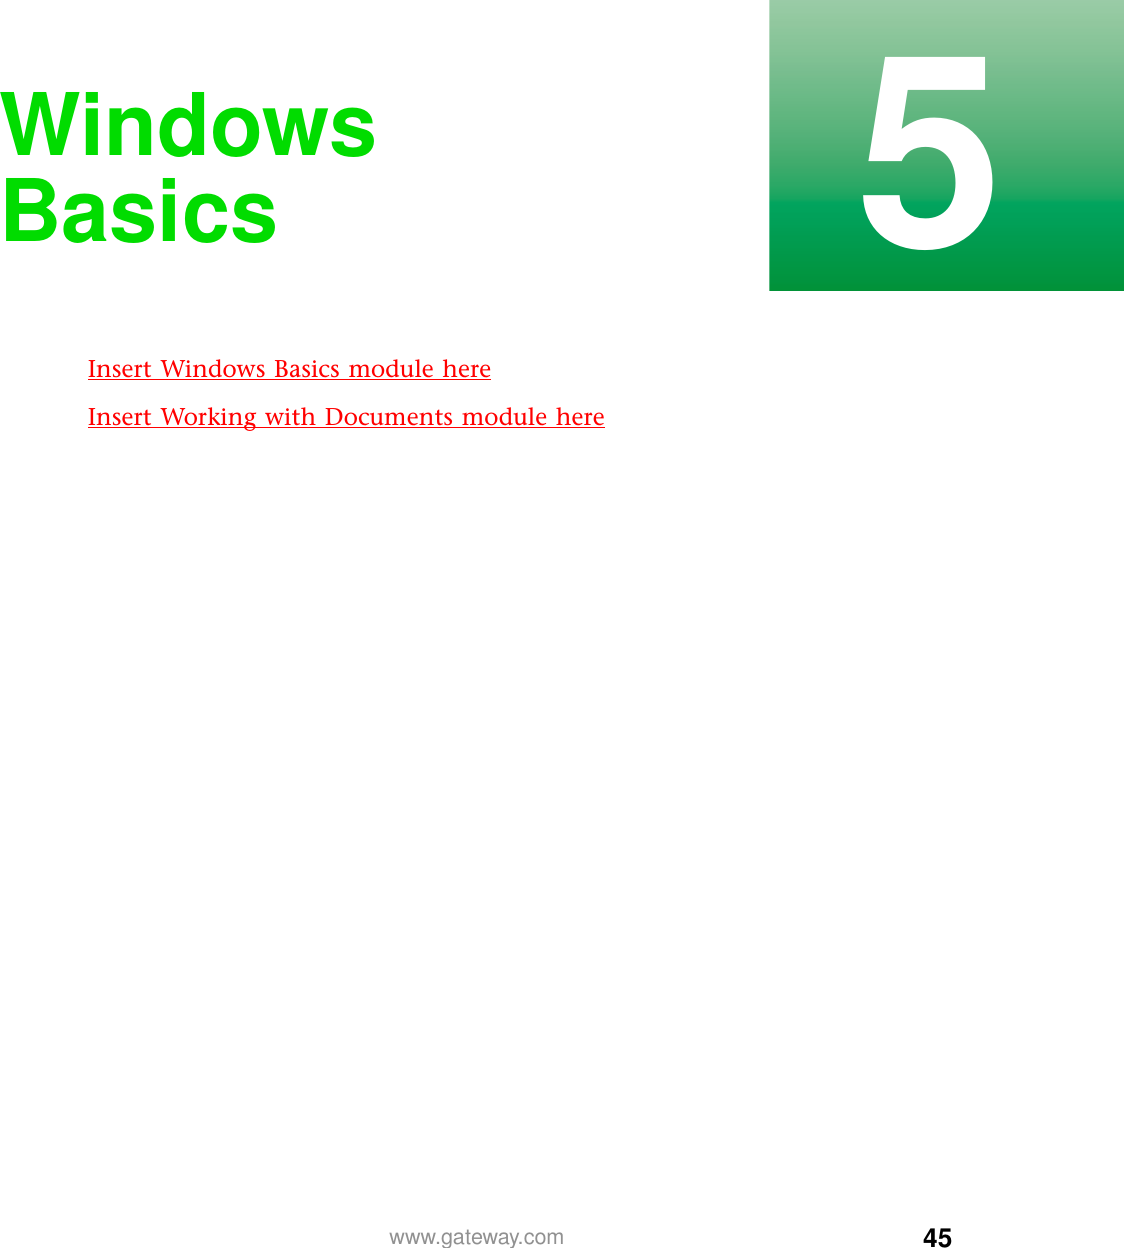 455www.gateway.comWindows BasicsInsert Windows Basics module hereInsert Working with Documents module here